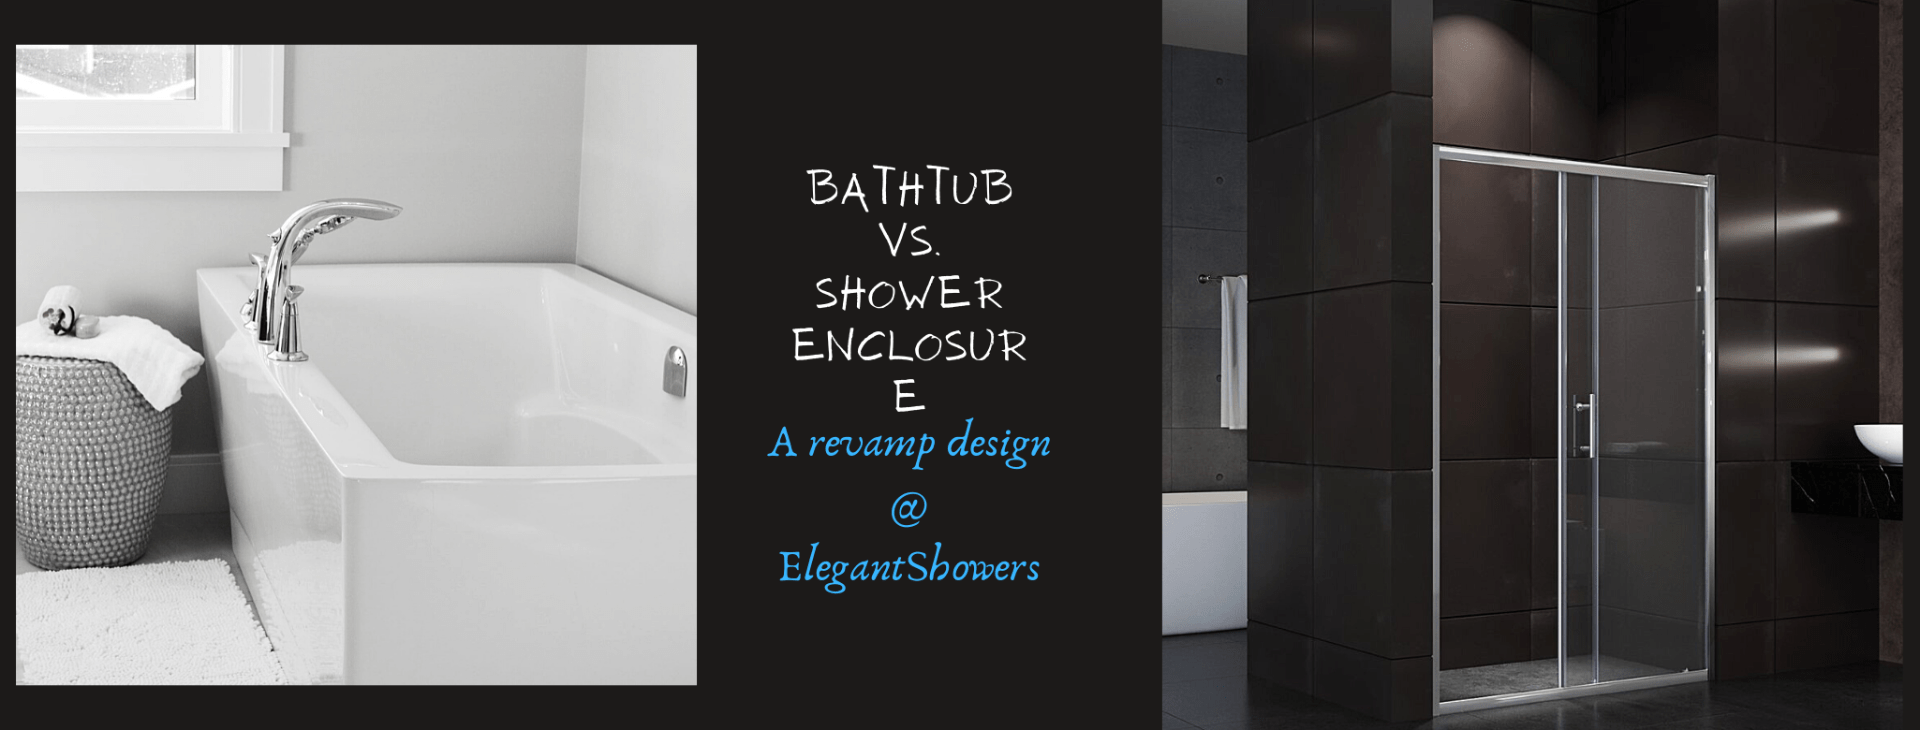 Bathtub Vs Shower Enclosure - Elegant Showers